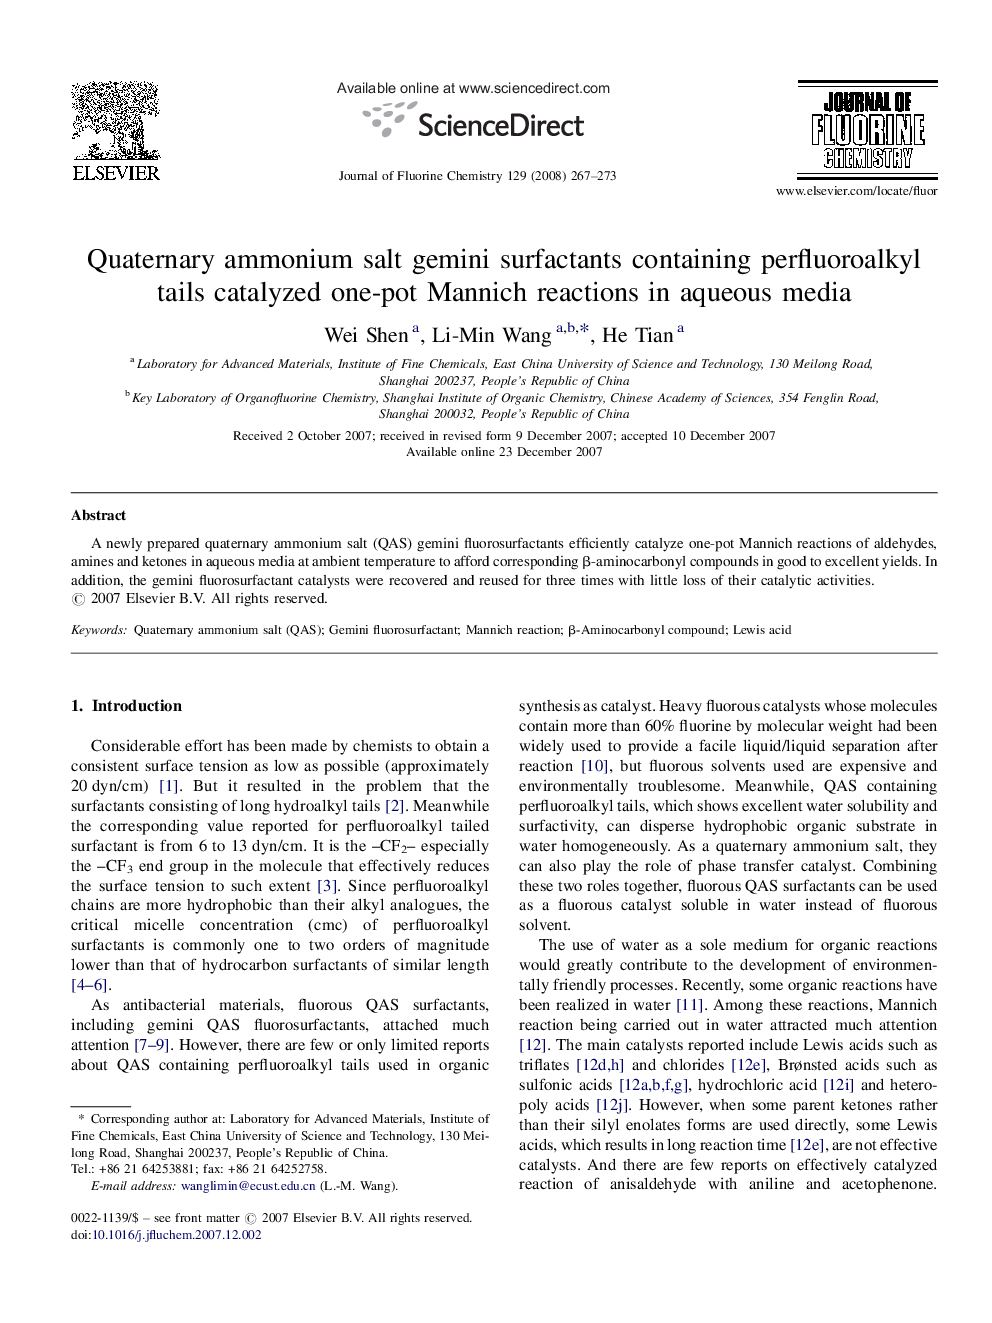 Quaternary ammonium salt gemini surfactants containing perfluoroalkyl tails catalyzed one-pot Mannich reactions in aqueous media